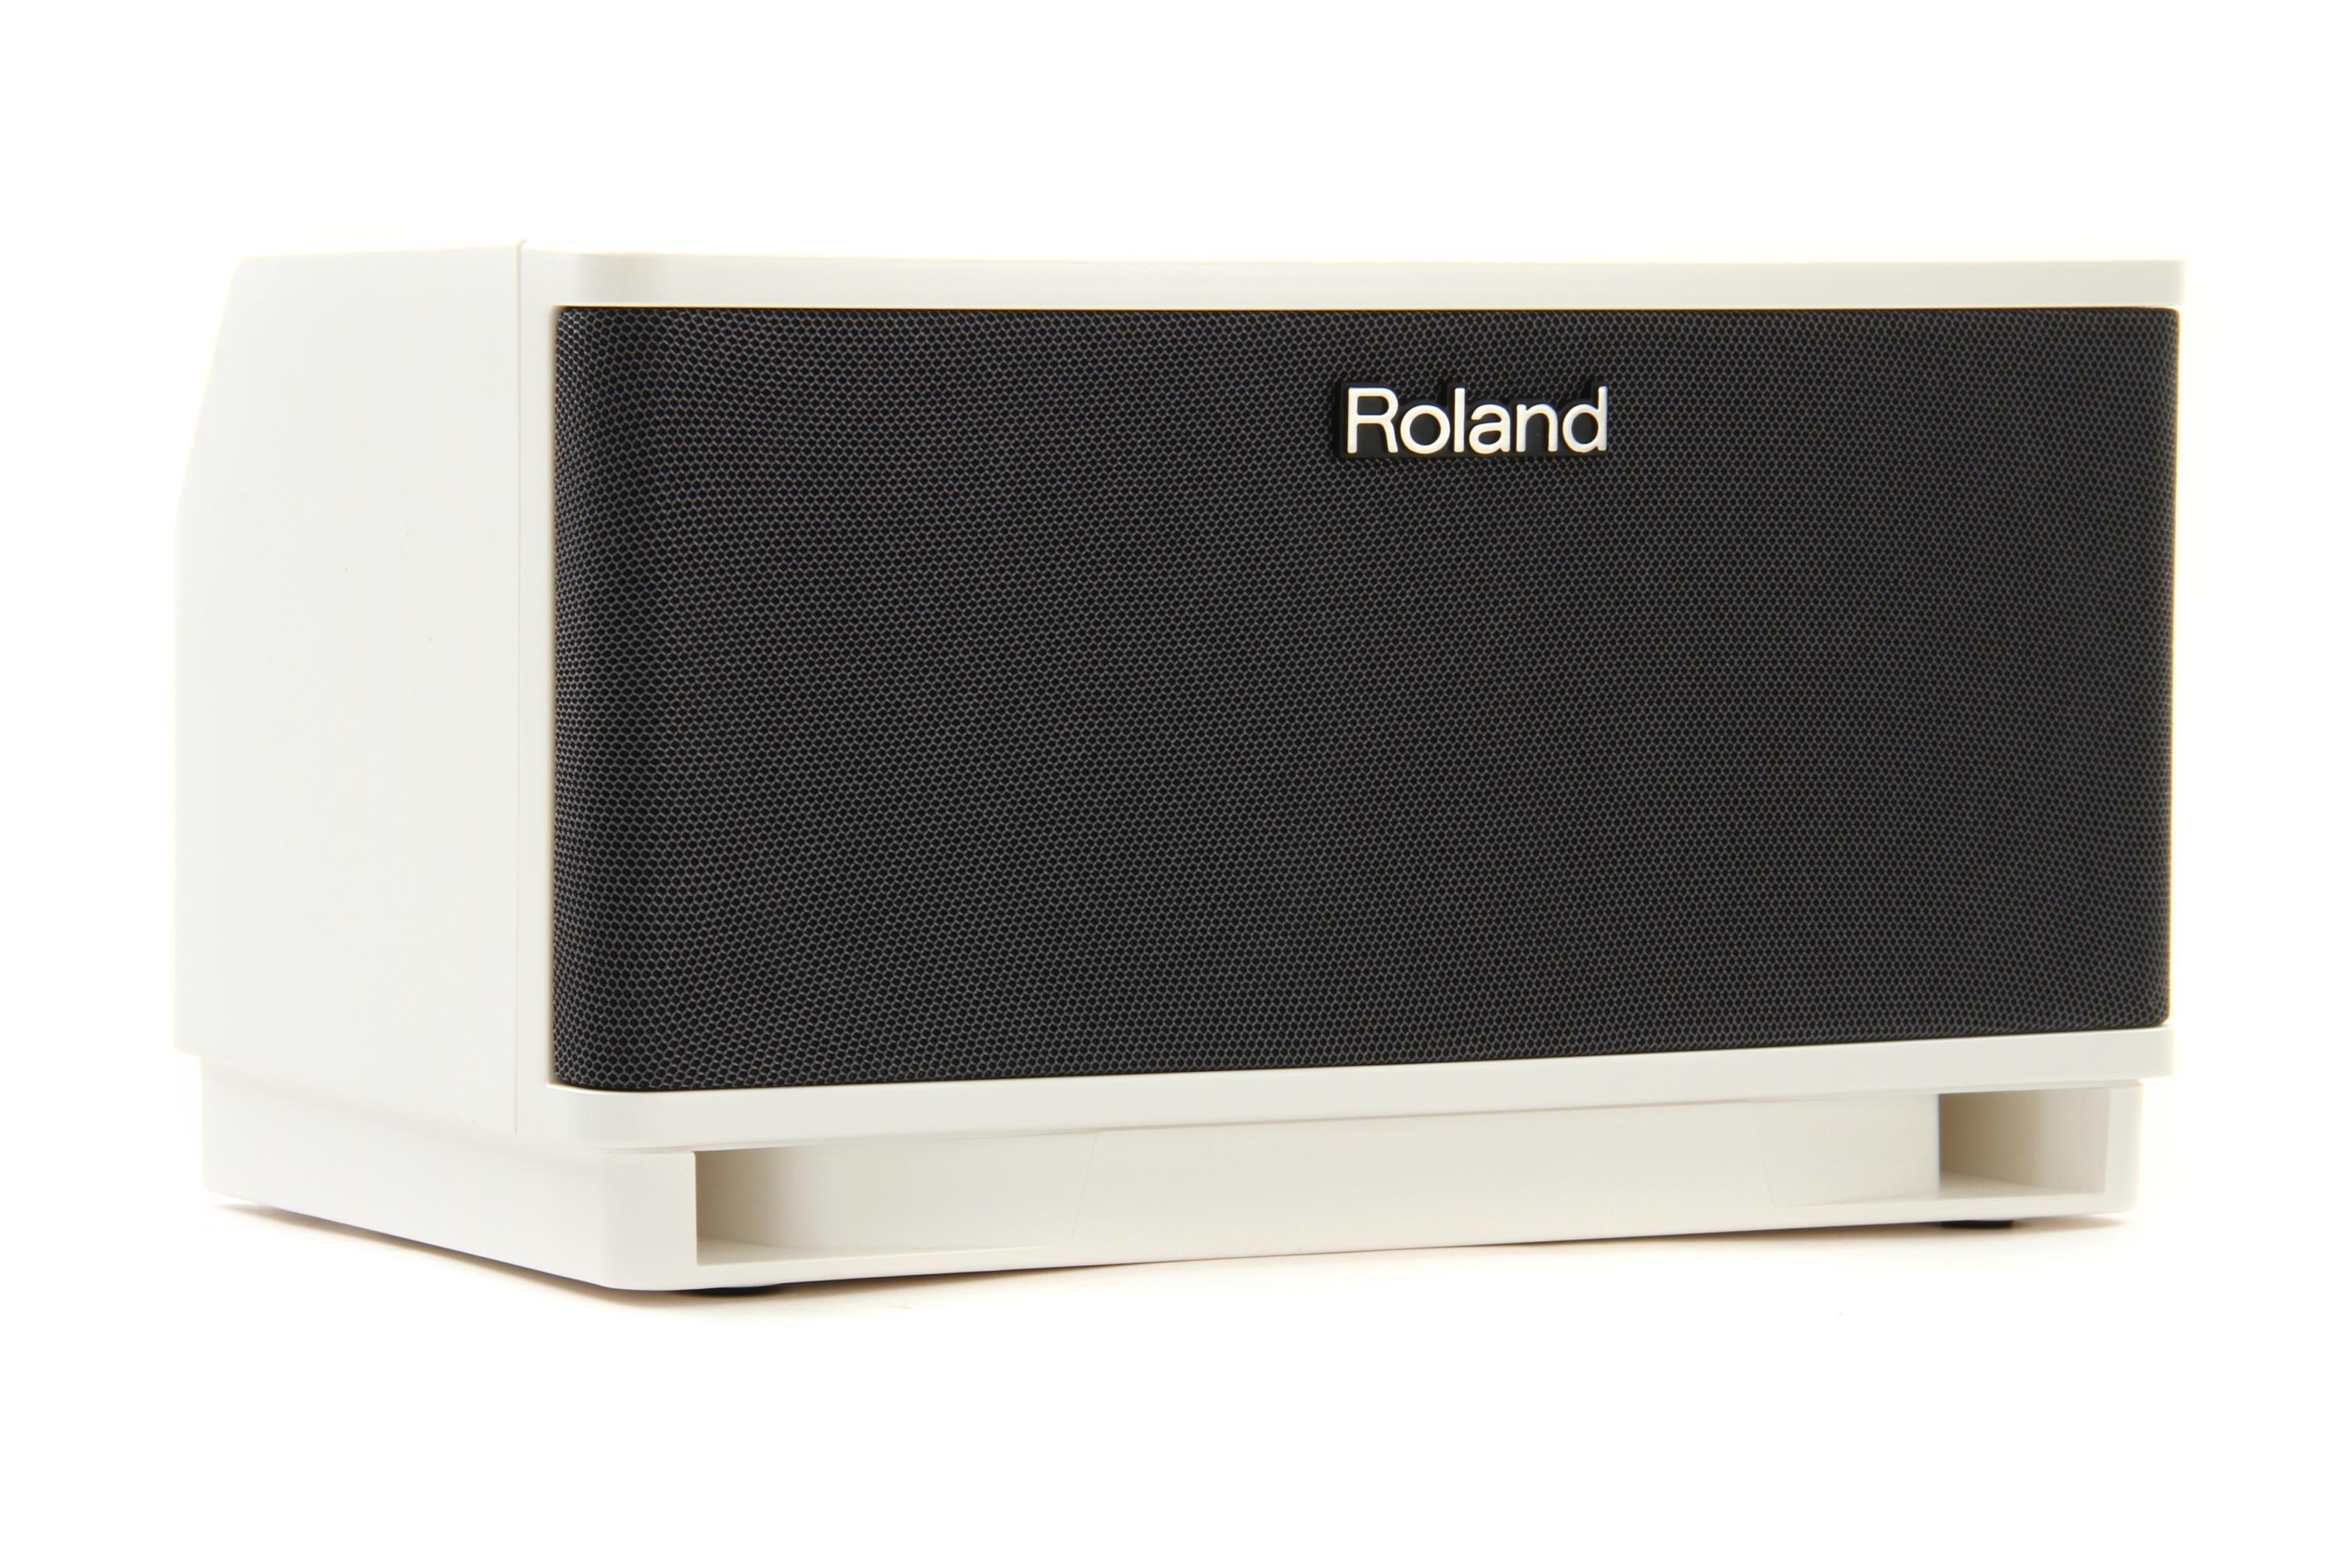 10　Lite　Roland　Amp　Watt　Sweetwater　Cube　White　3x3